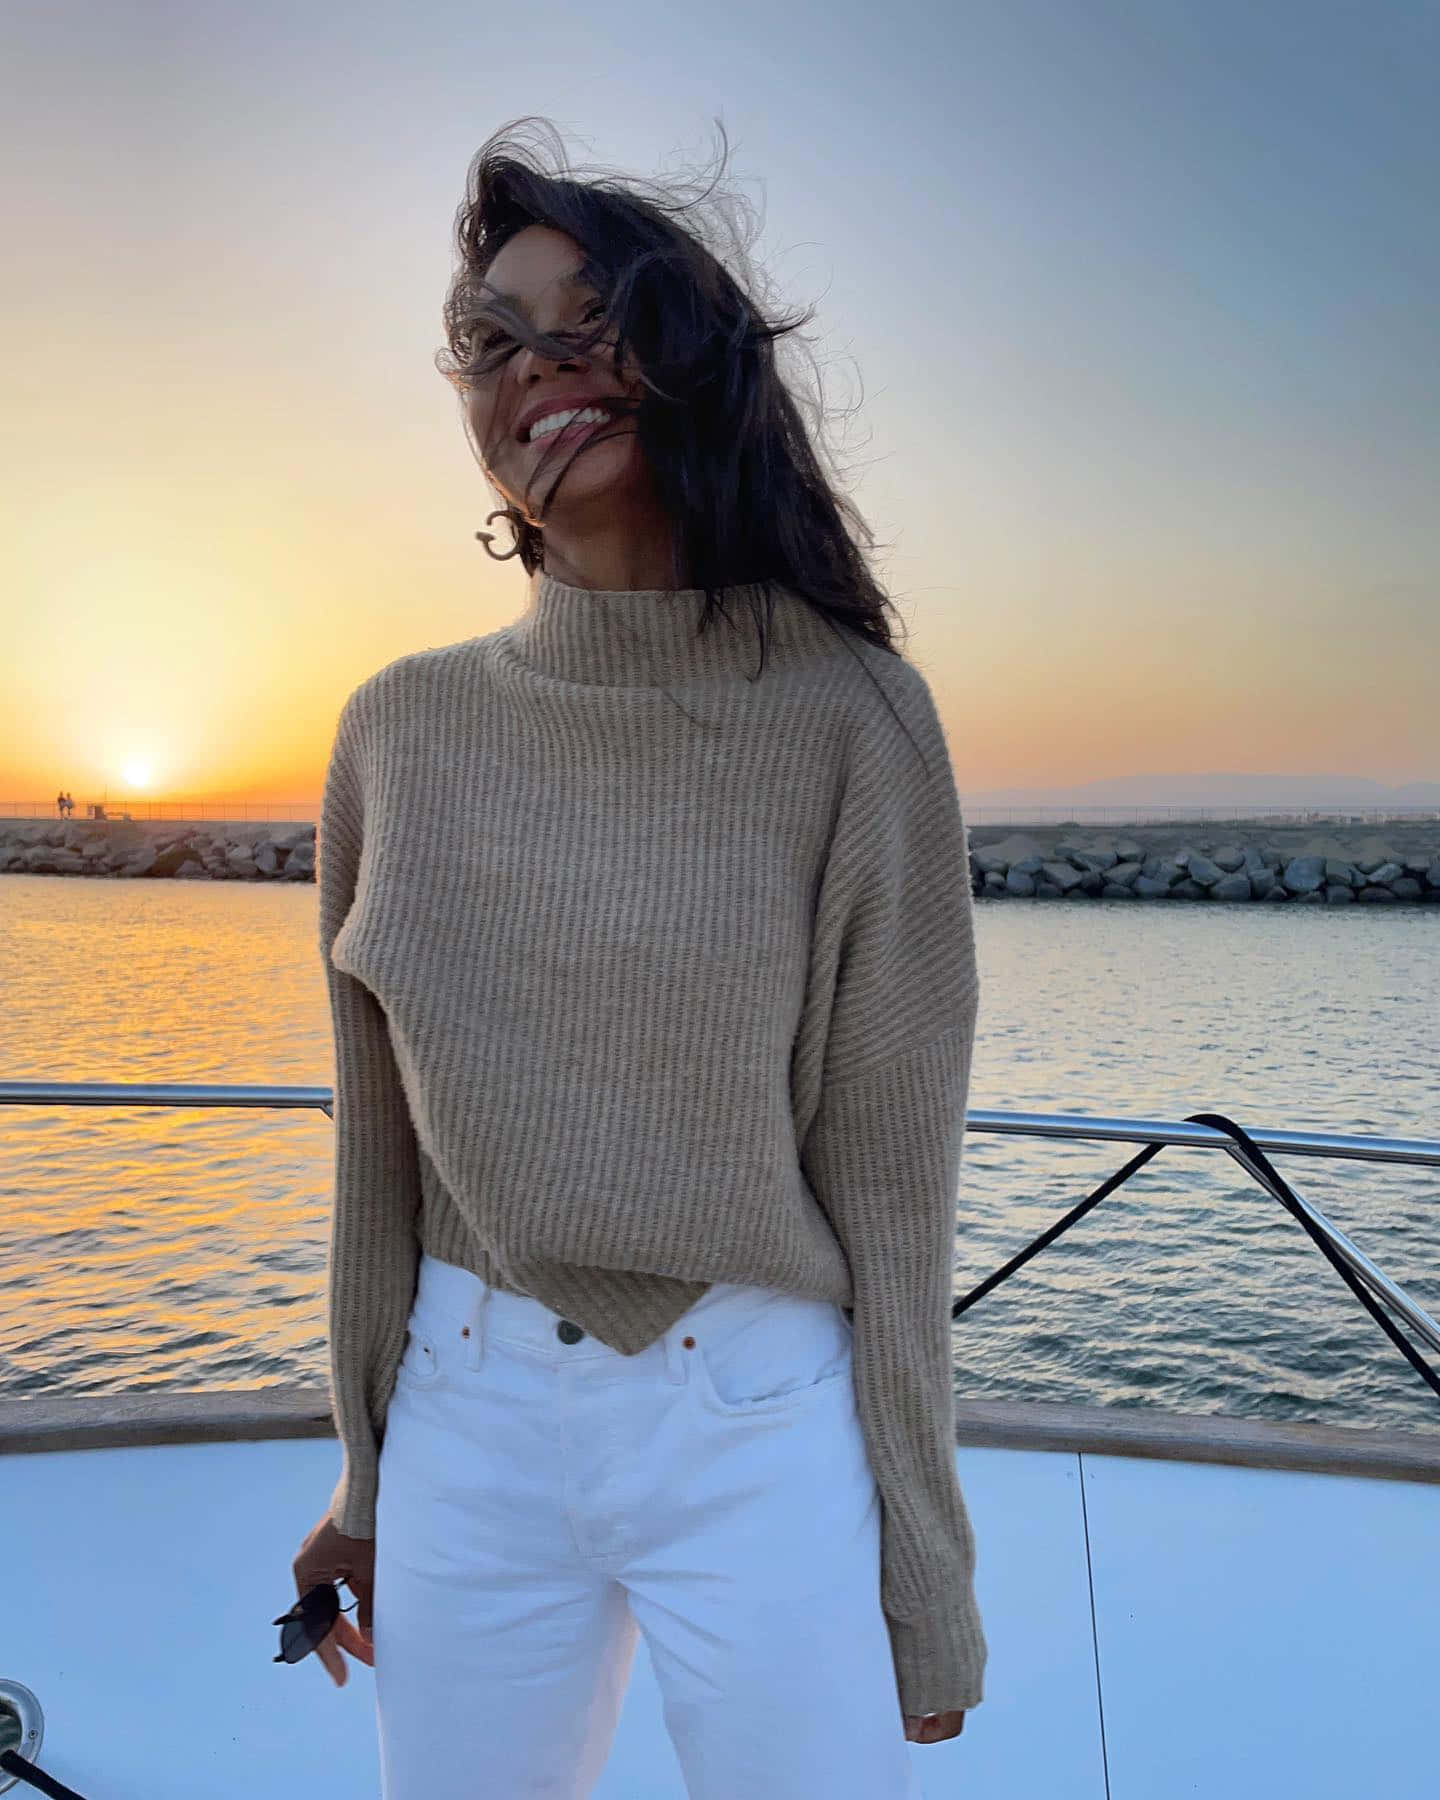 Sunset Smile Aboard Yacht Wallpaper